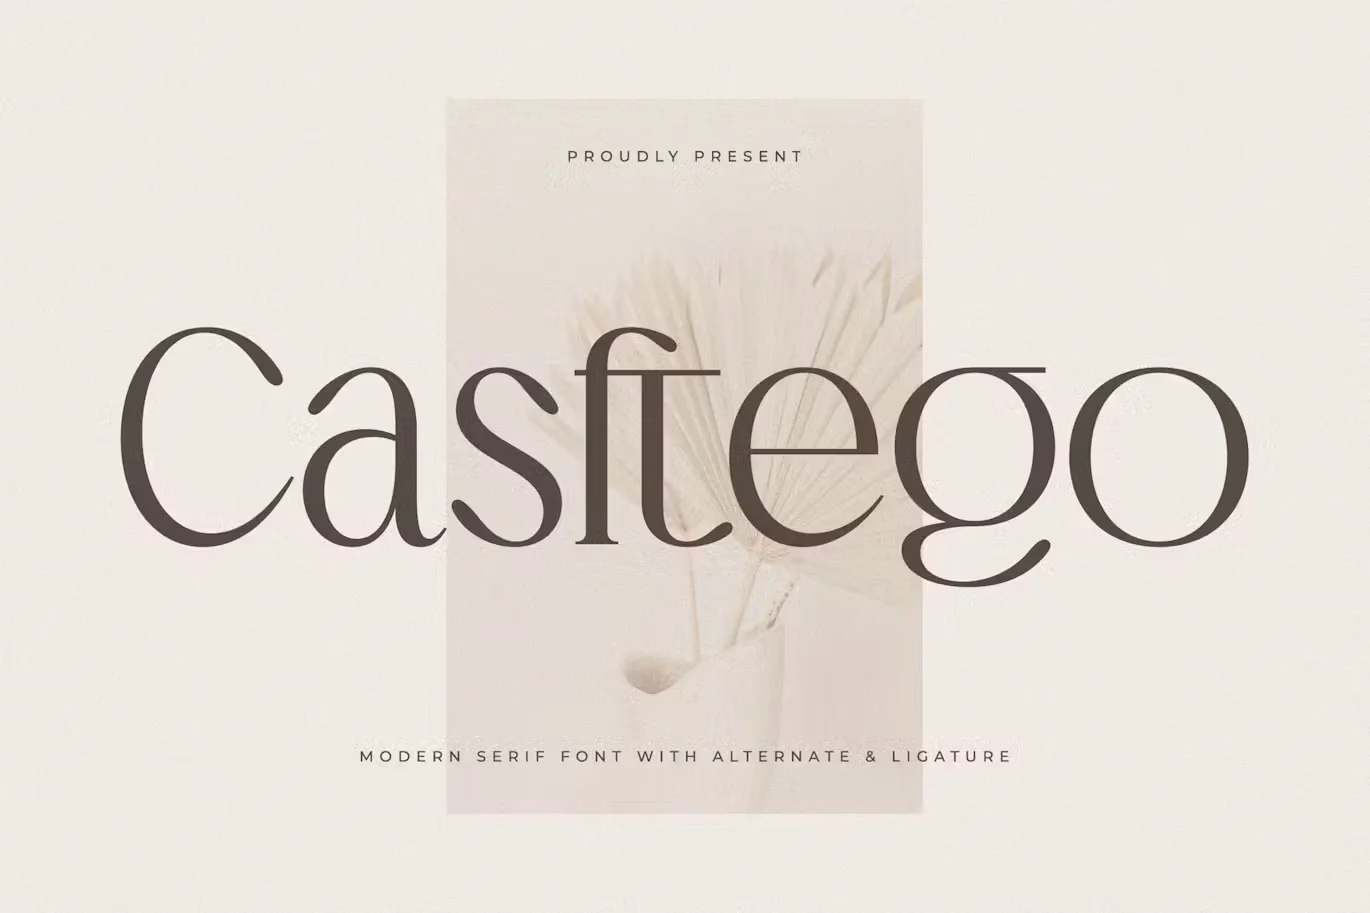 Casftego Modern Serif Font